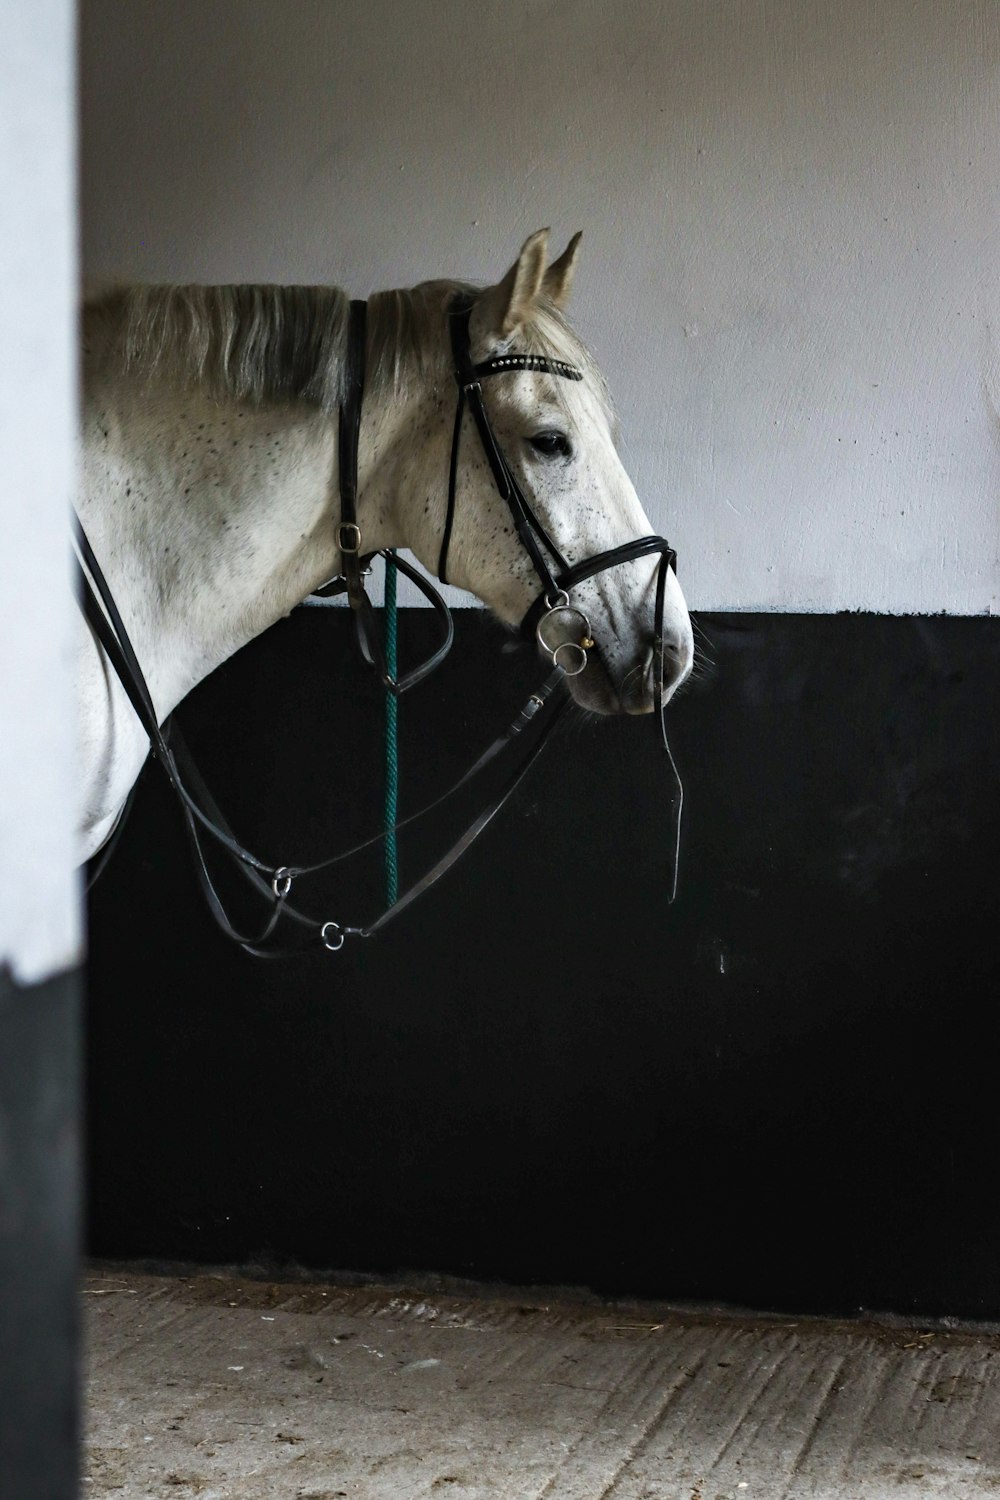 white horse on black surface